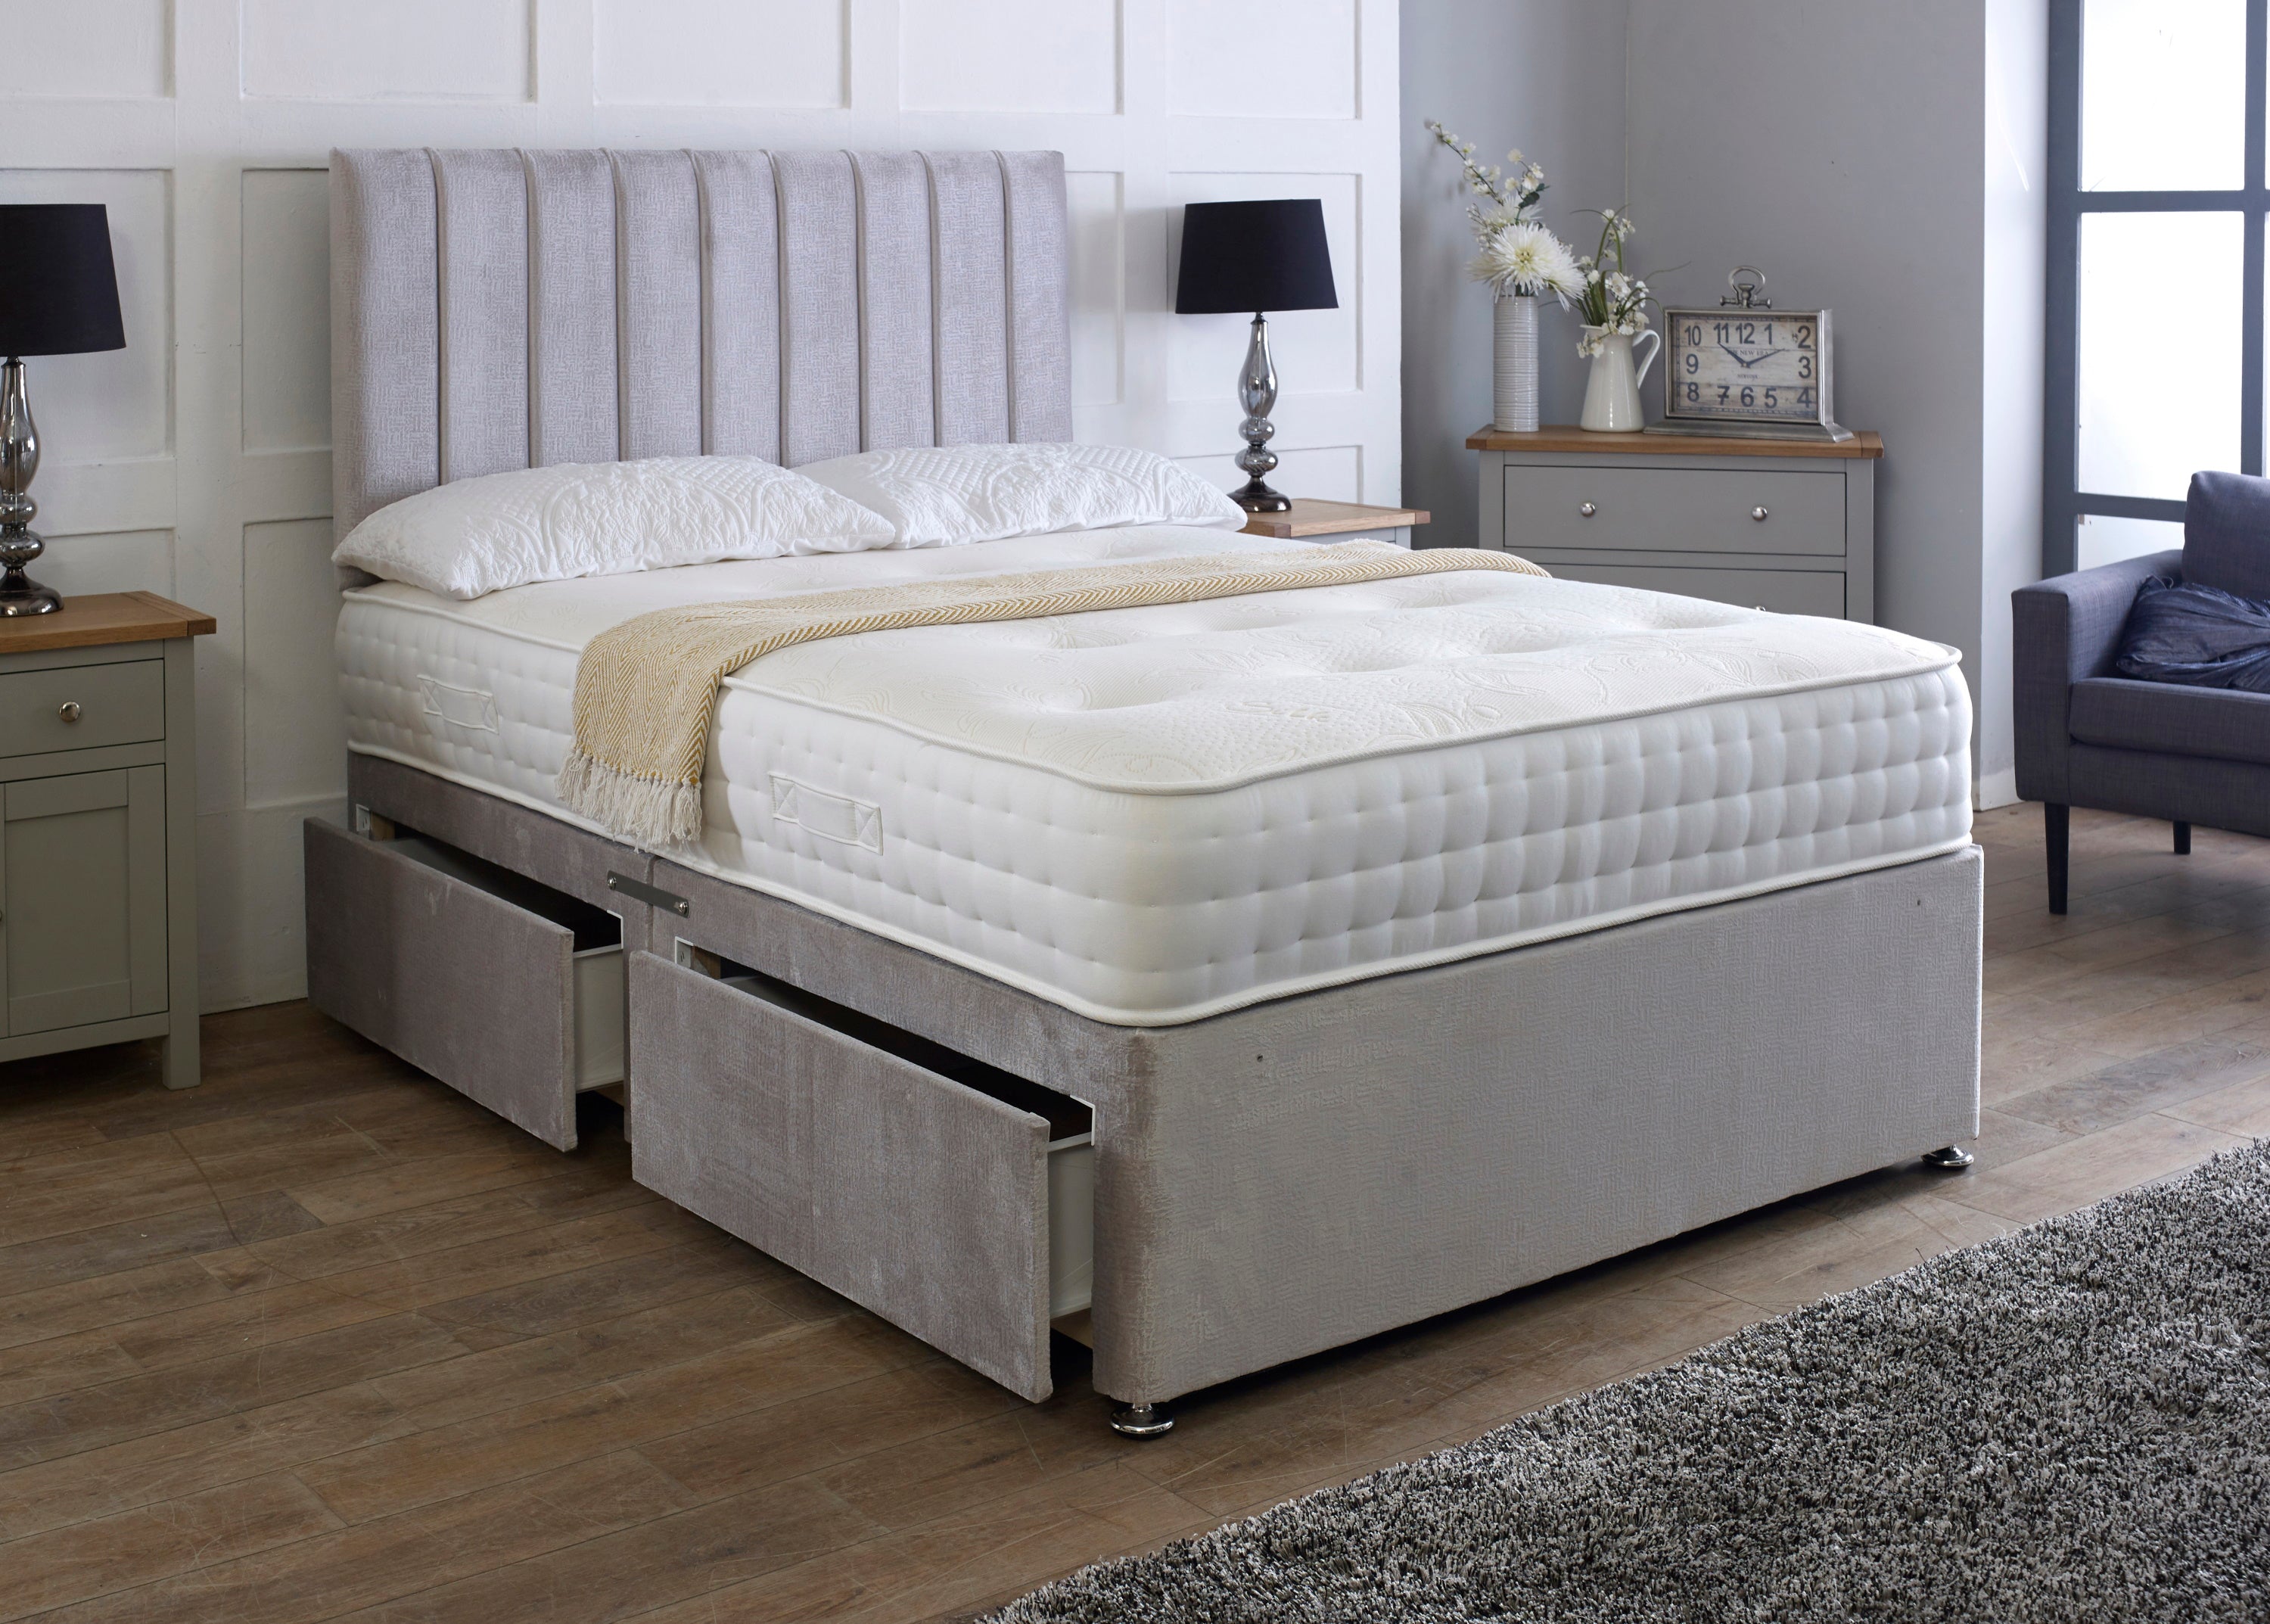 Apollo Divan Bed Set With Mattress Options